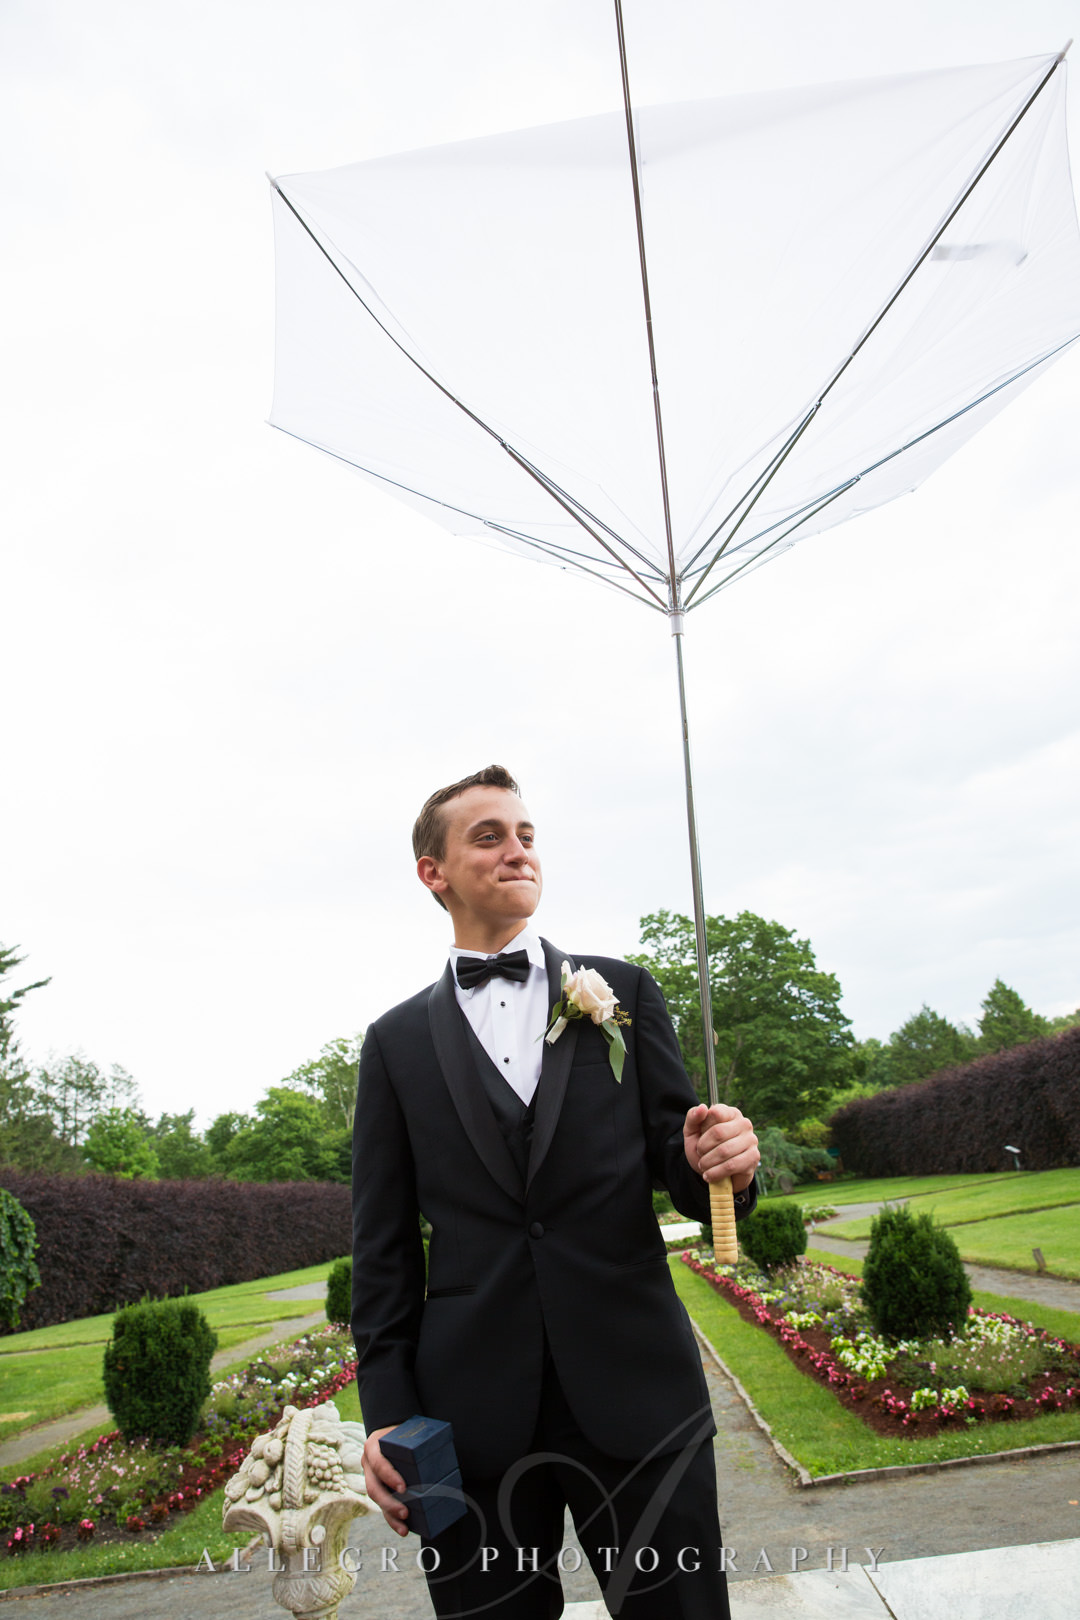 Son of groom holding upside-down umbrella | Allegro Photography